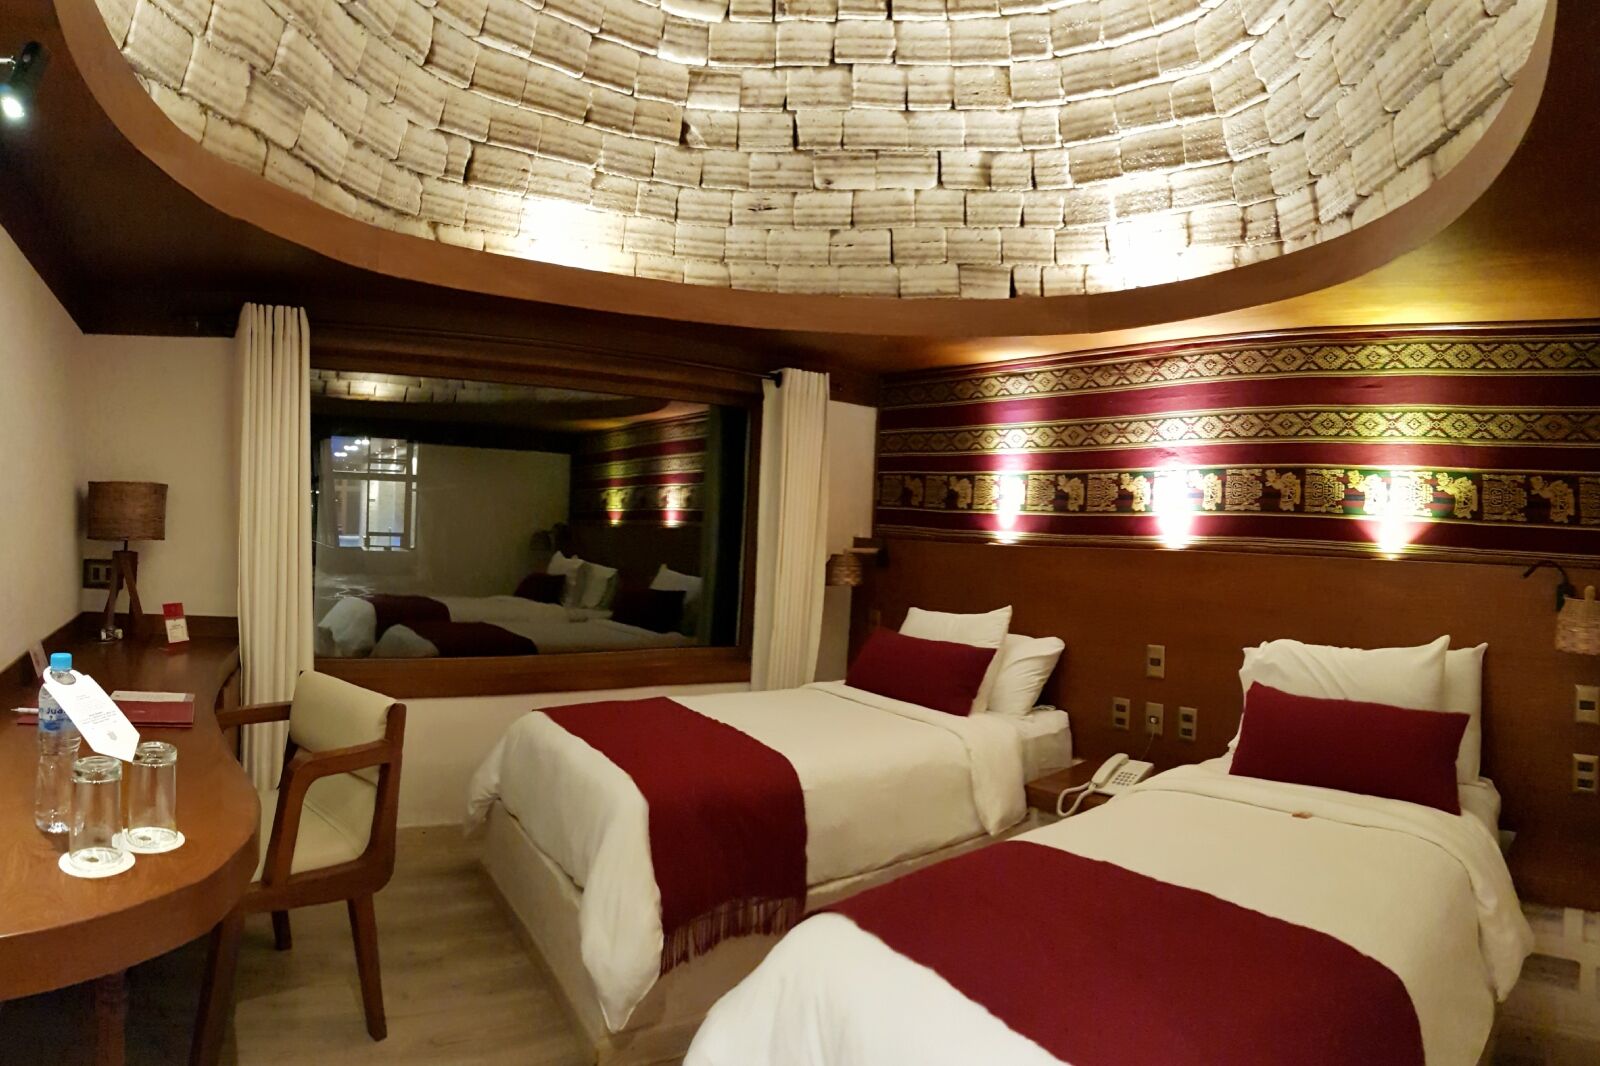 A bedroom inside the splendid Hotel "Palacio de Sal" at the entrance of the Salar de Uyuni, Bolivia